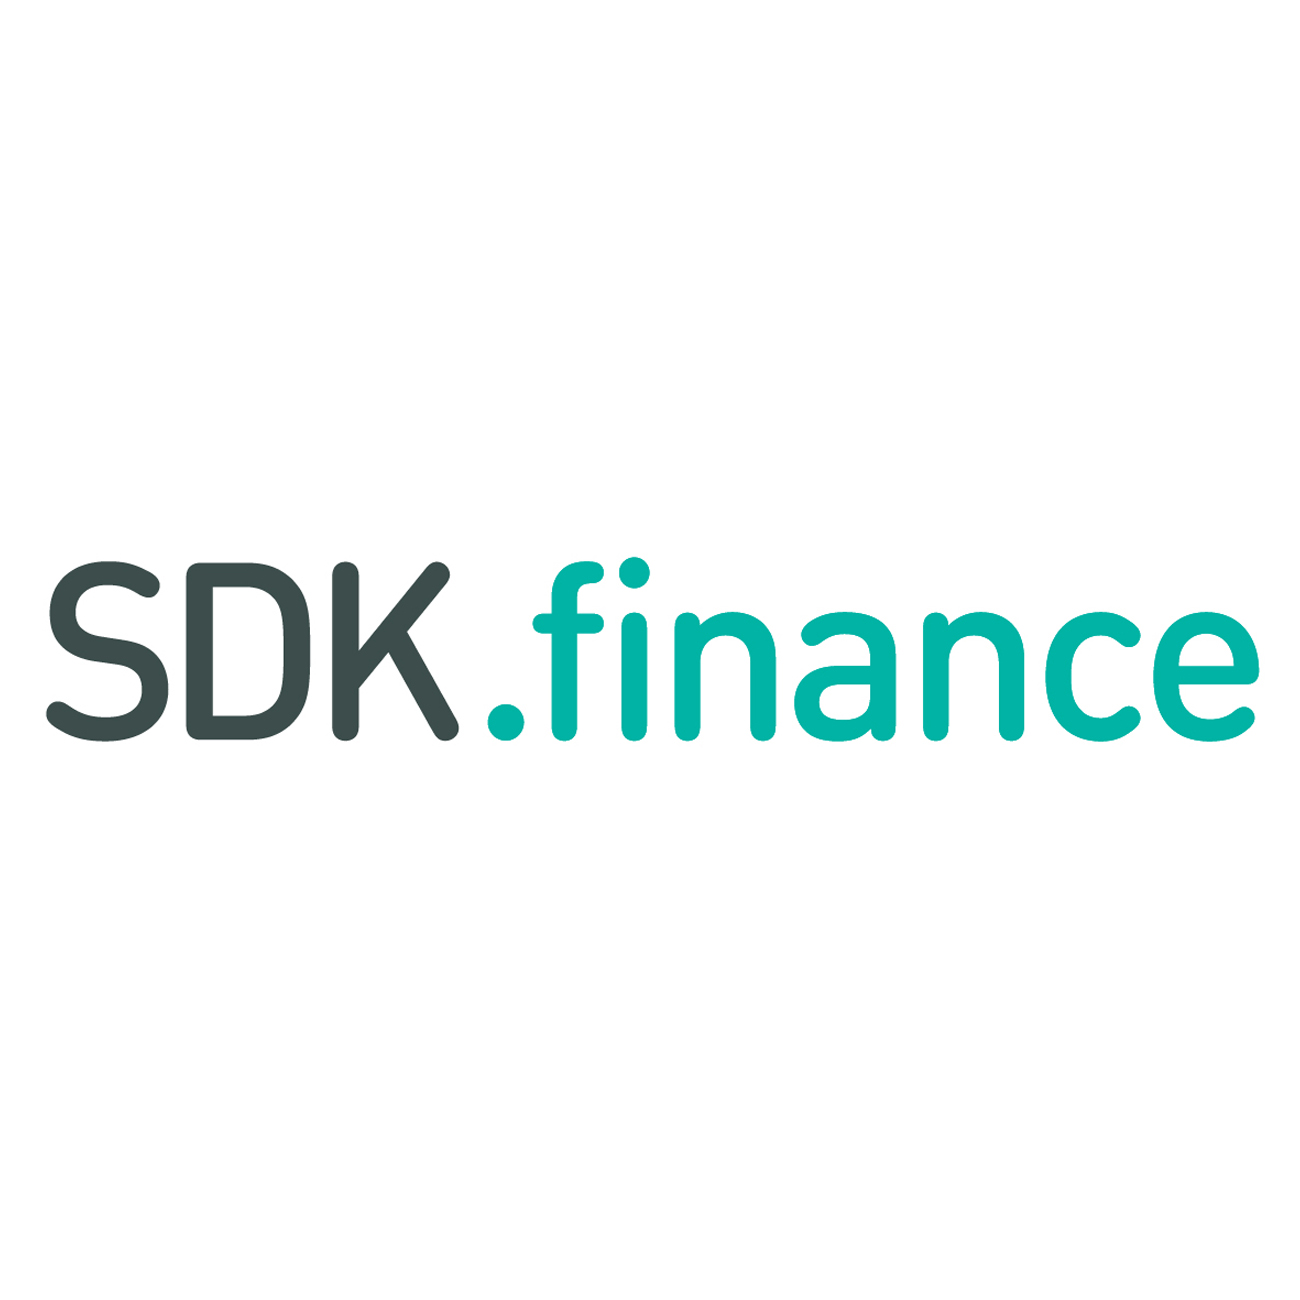 SDK.finance supercedes Visa in terms of API endpoints